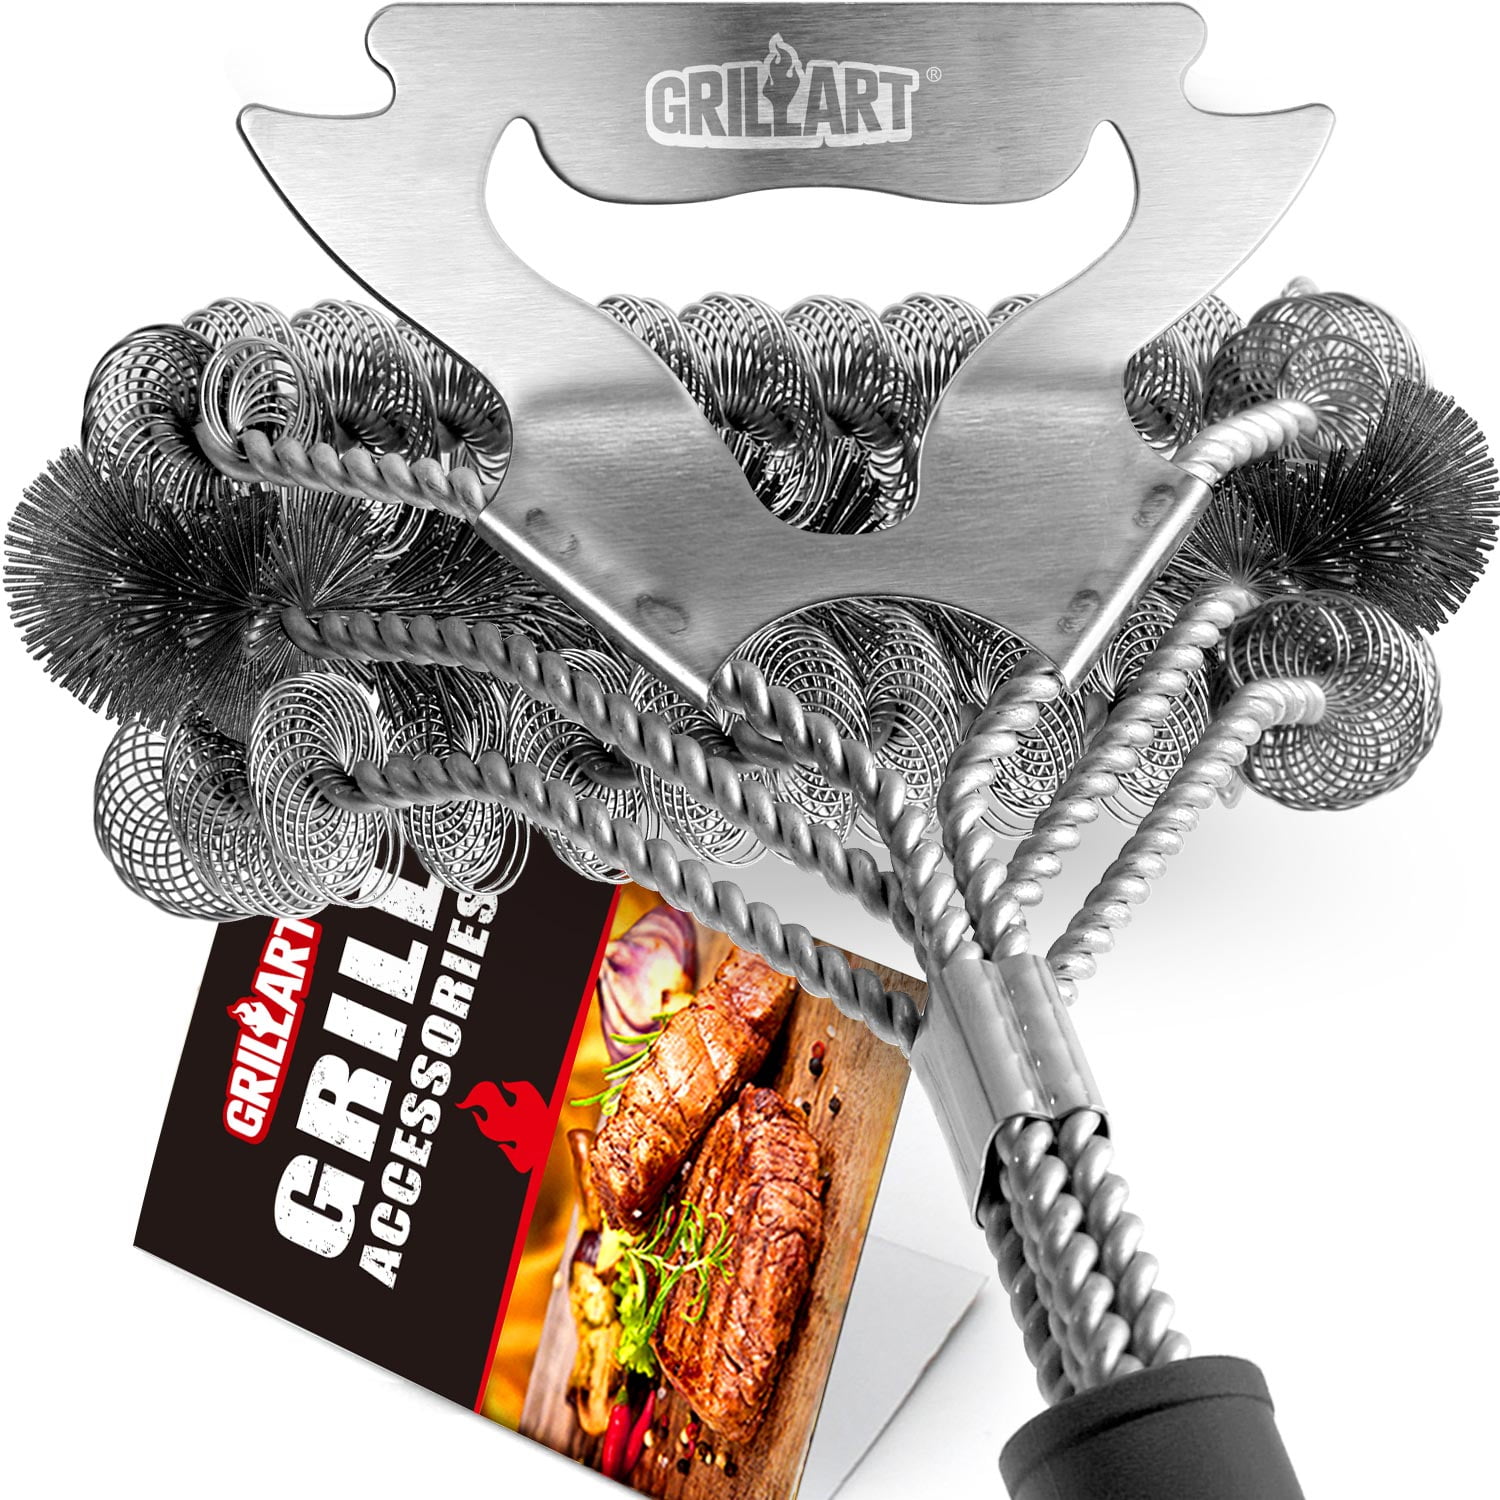 Grillart Grill Brush Bristle Free & Scraper - Safe BBQ Brush for Grill